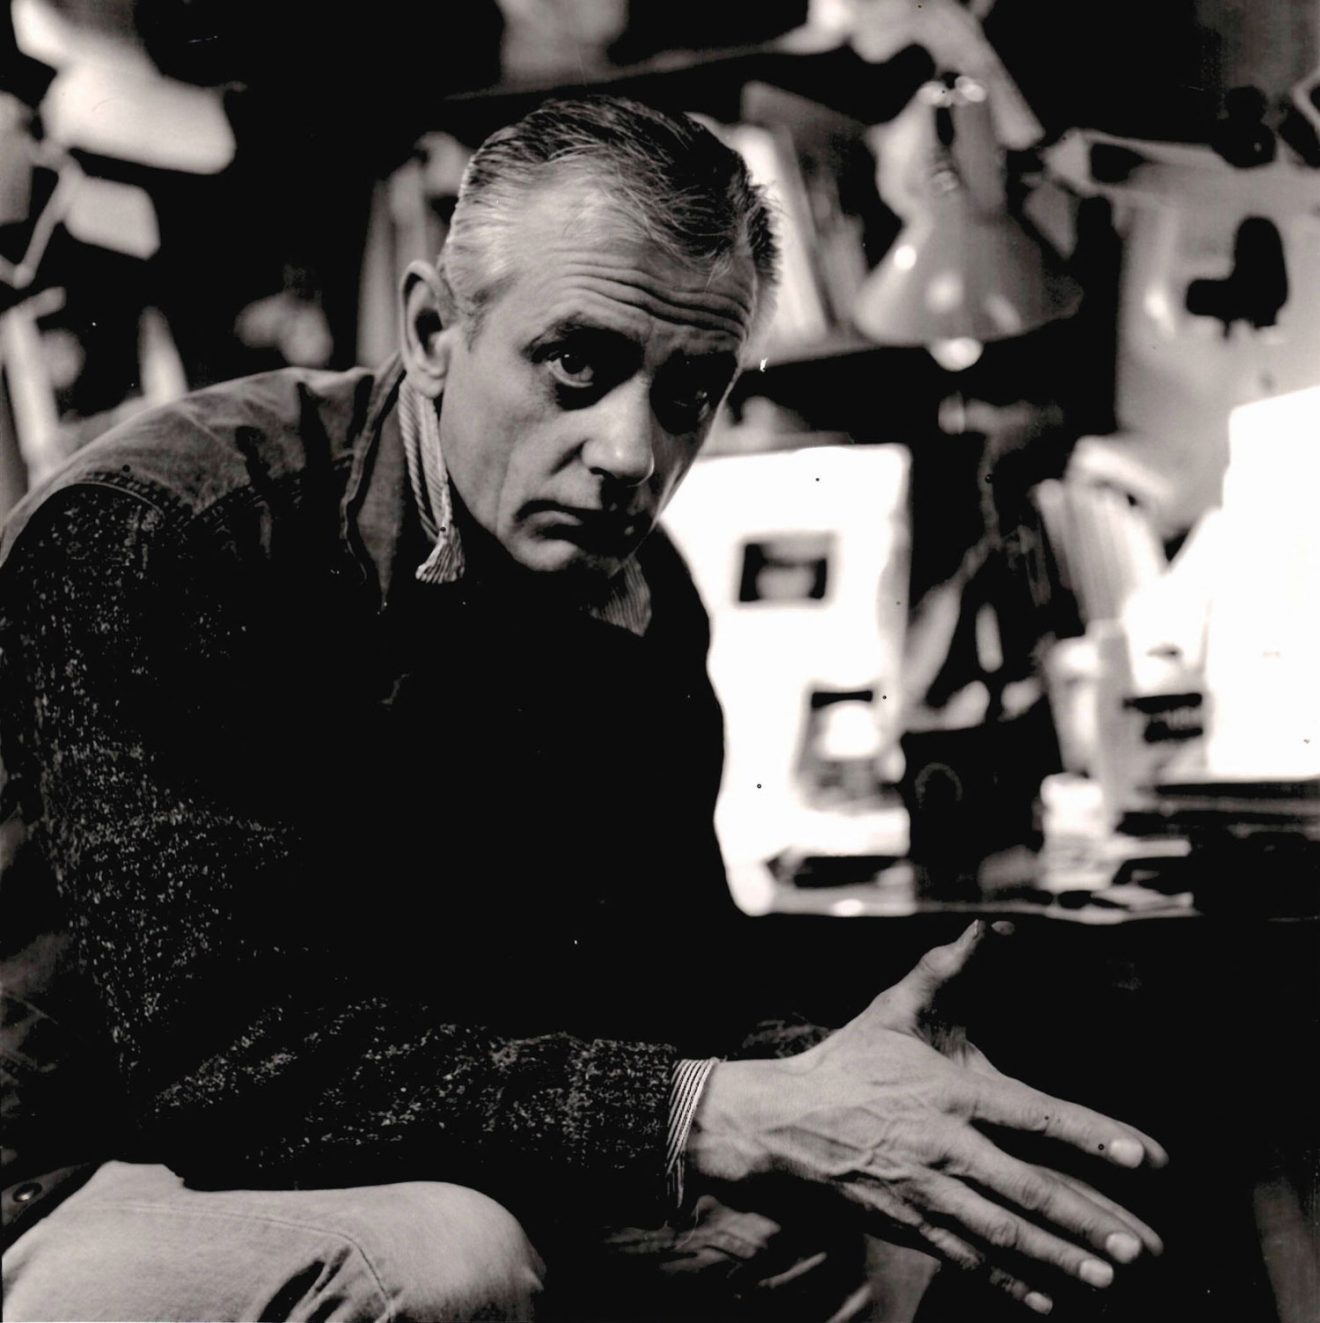 Artist and Art-A-Whirl Instigator David Felker dead at 80